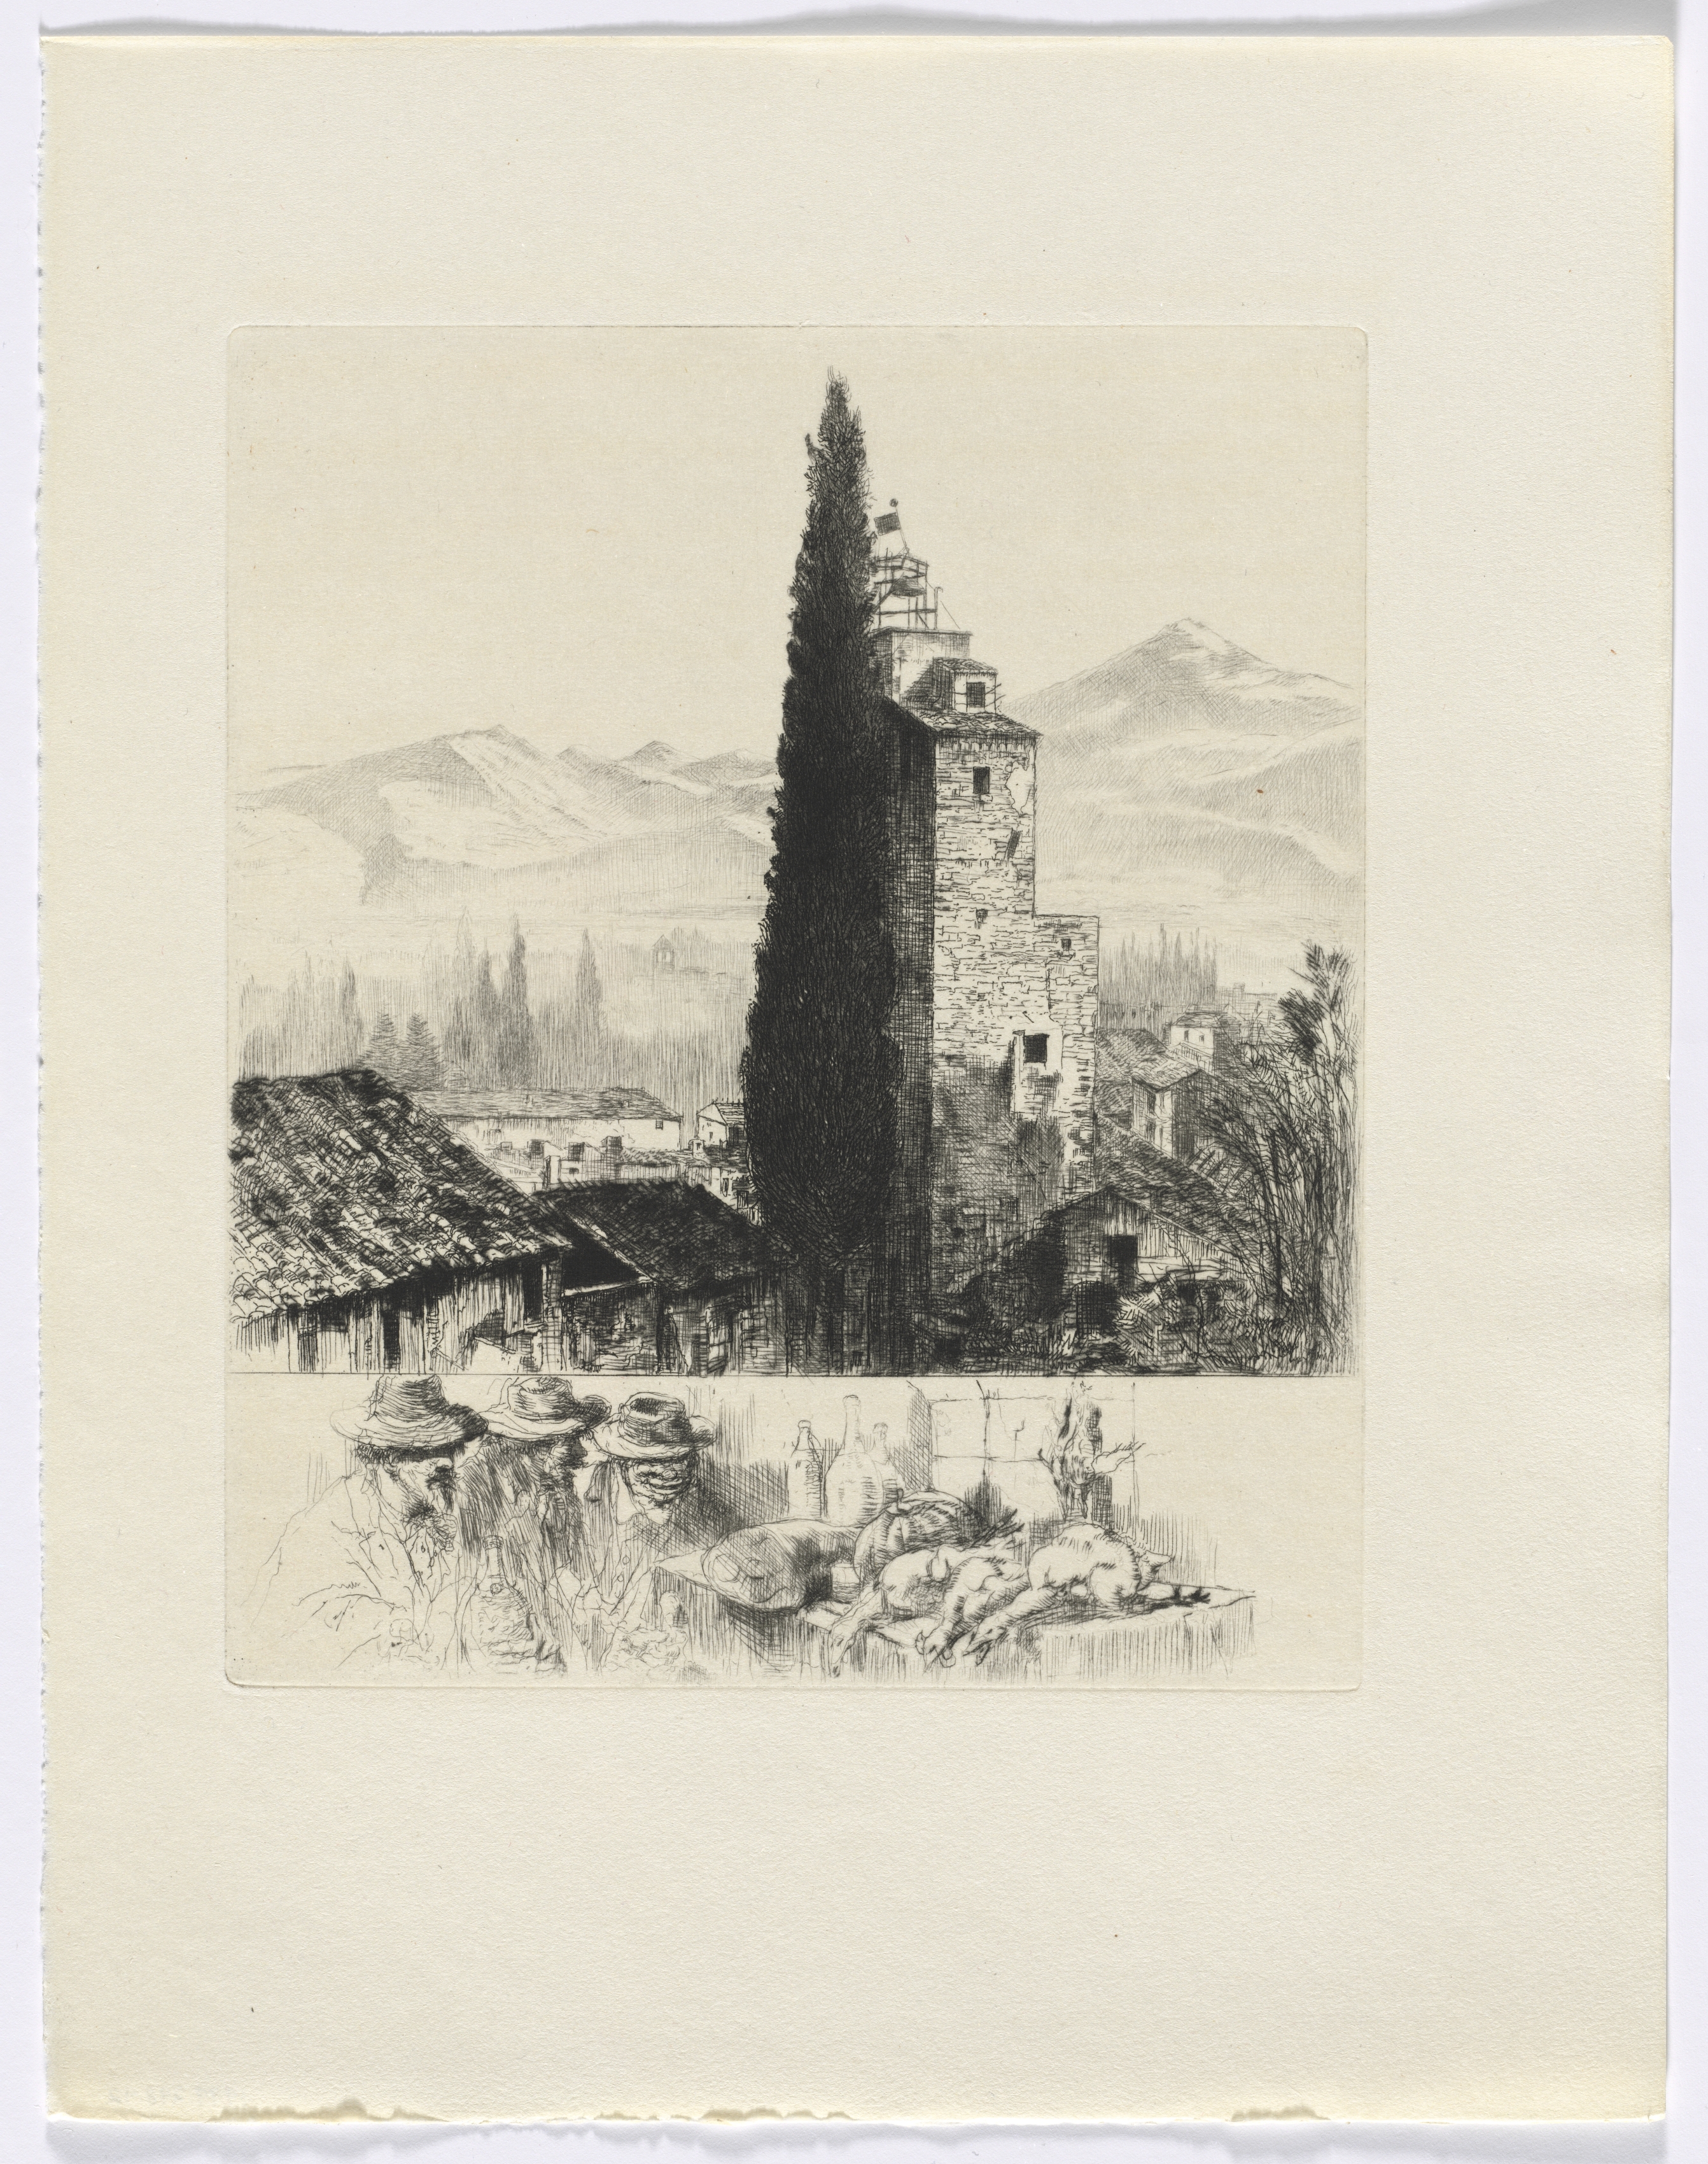 Frédéric Mistral: Mémoires et Recits by Frédéric Mistral: tower in landscape/ man and dead game (insert after p. 200)